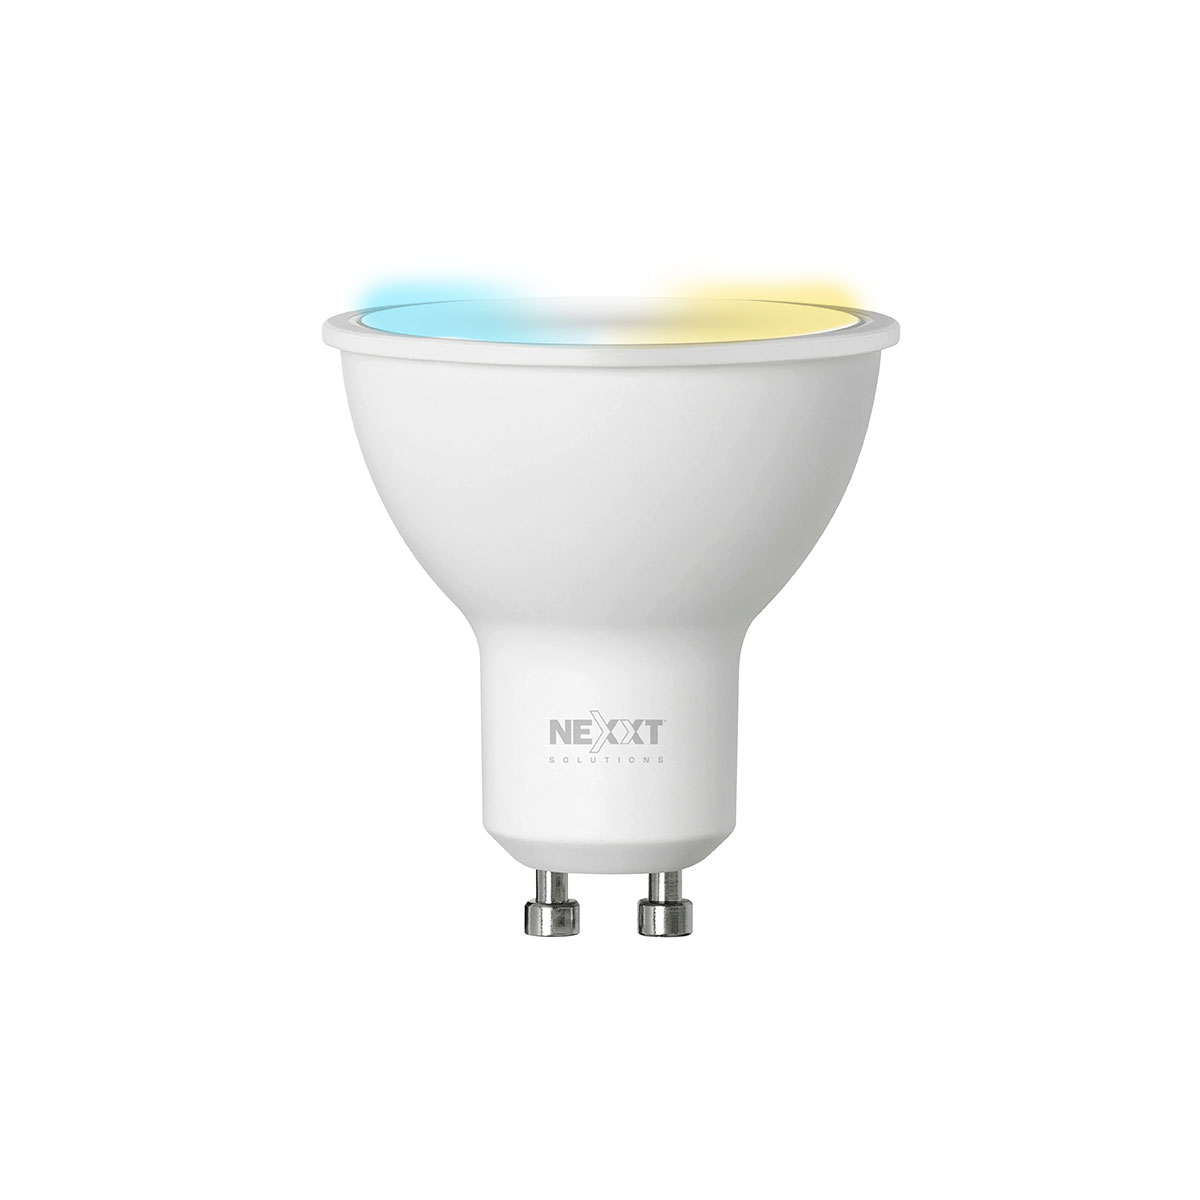 Nexxt Solutions NHB-W310 3PK iluminación inteligente Bombilla inteligente 4 W Blanco Wi-Fi